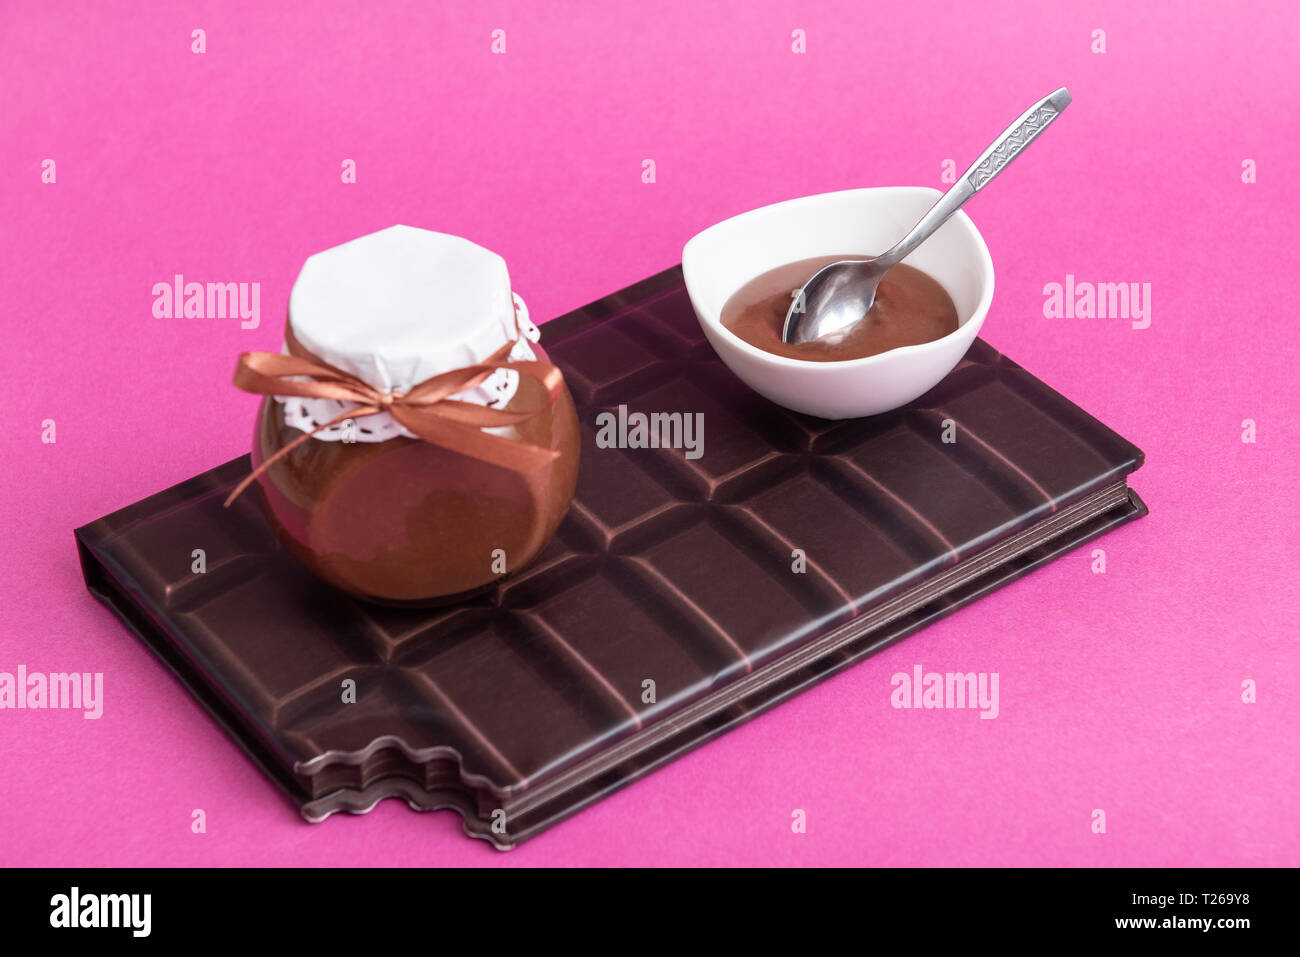 Chocolate sorbet or jam in jar Stock Photo